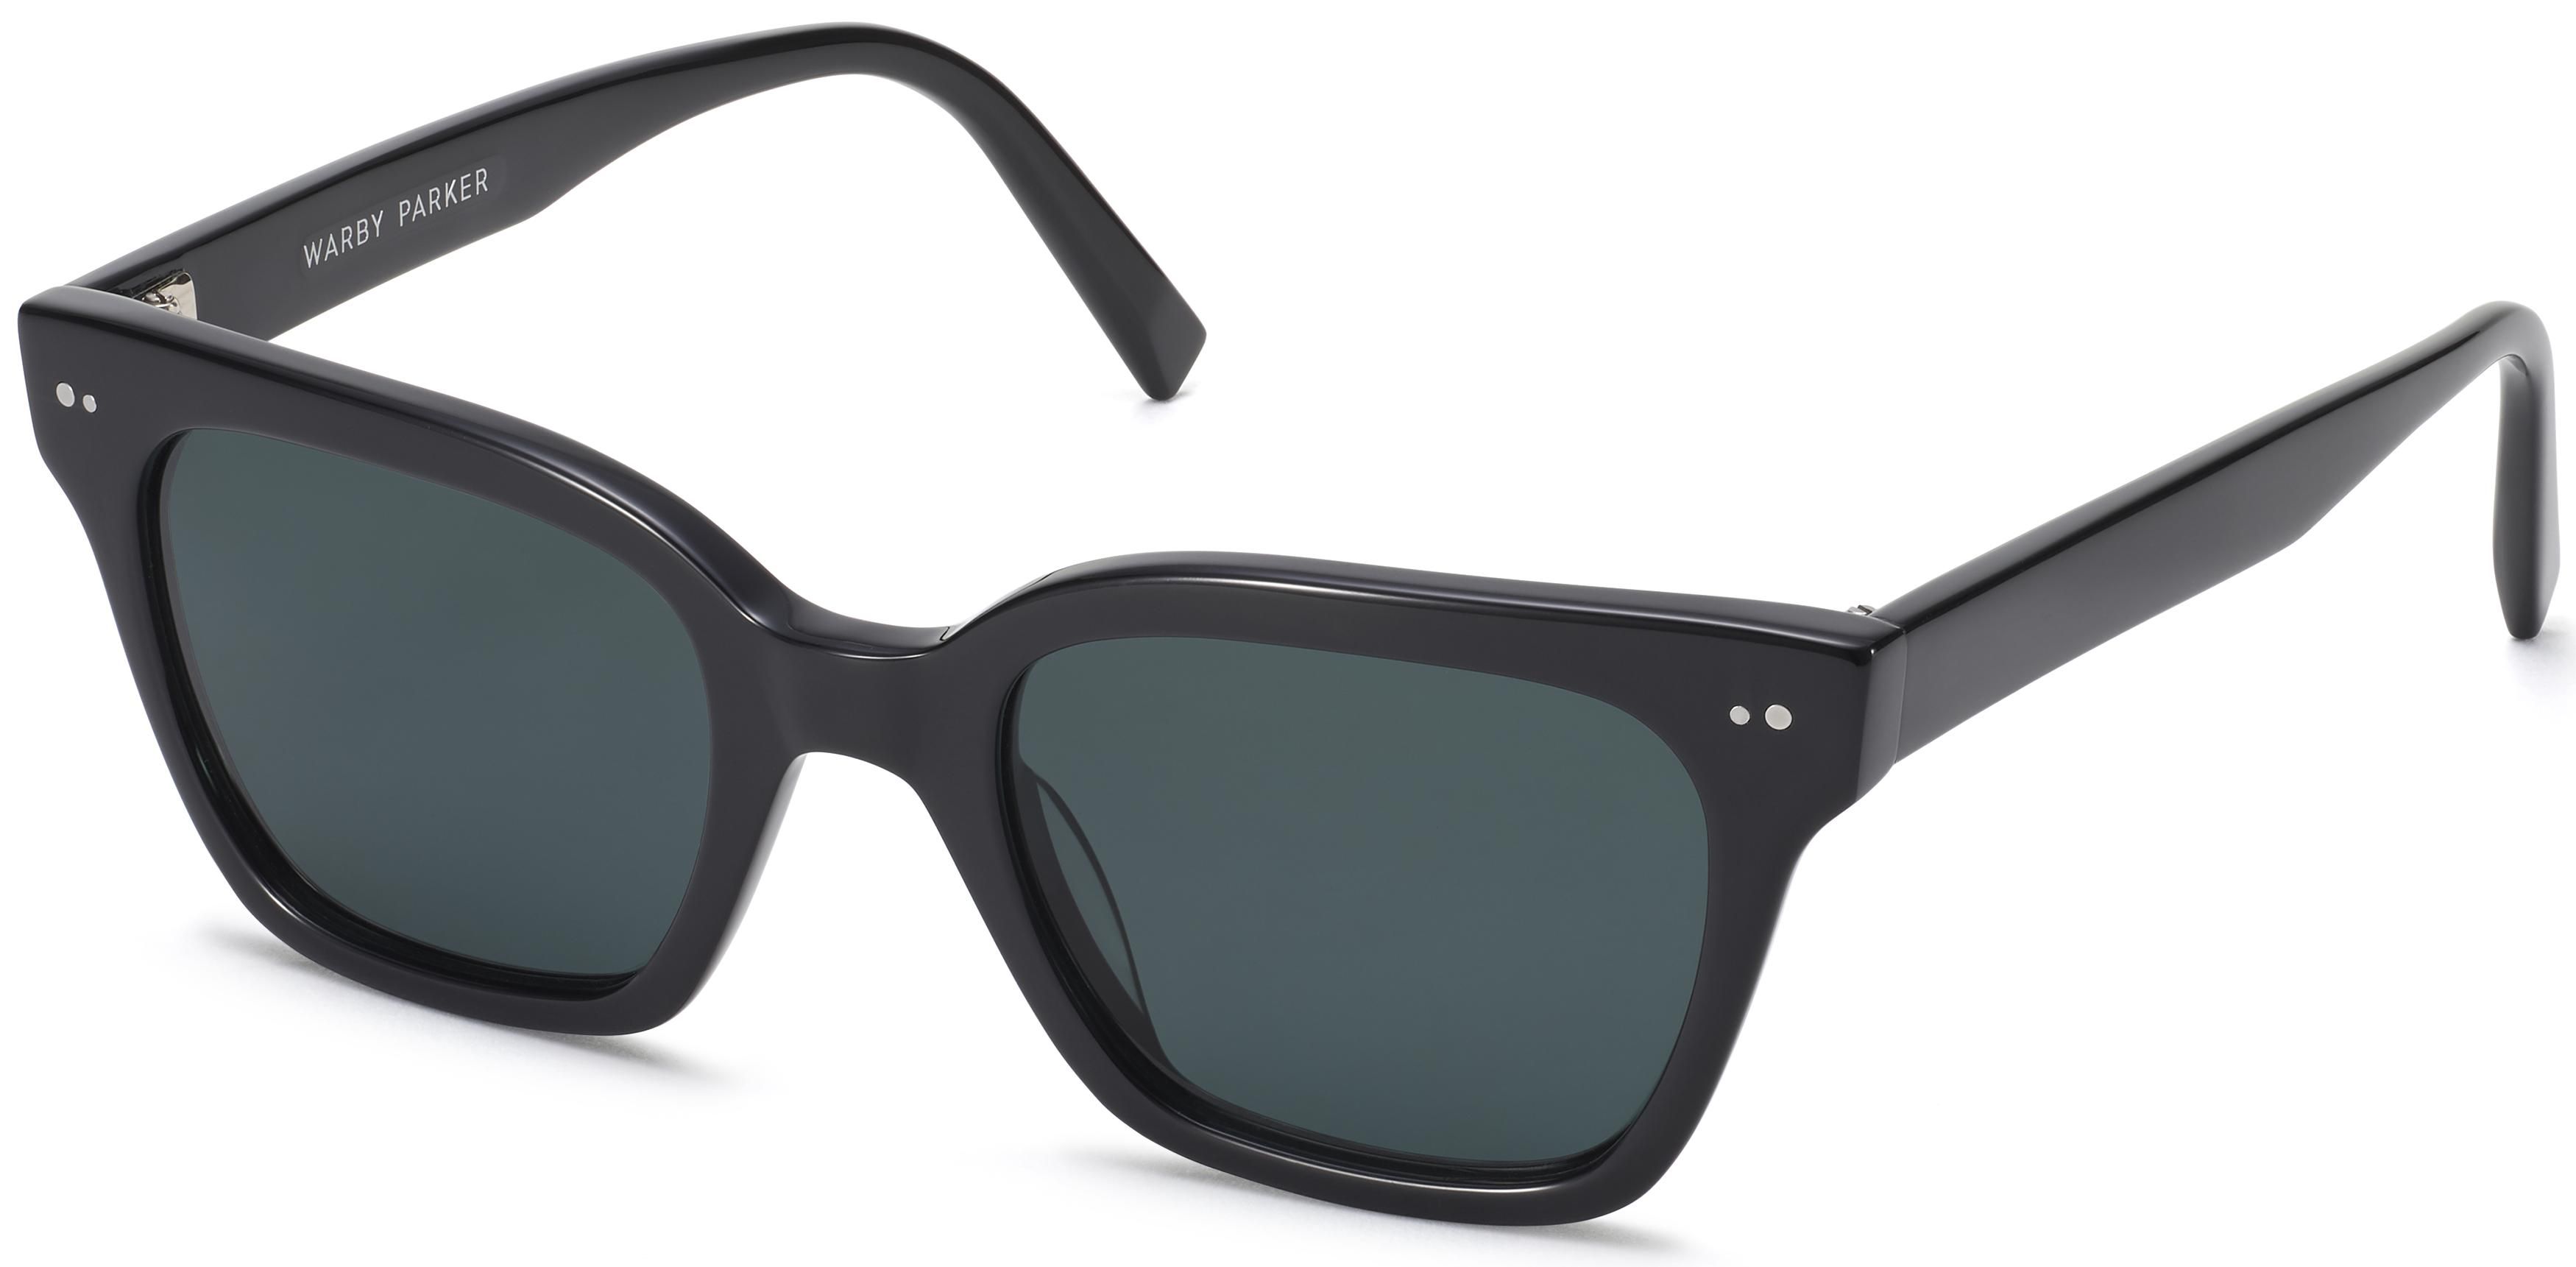 Beale Sunglasses in Jet Black | Warby Parker | Warby Parker (US)